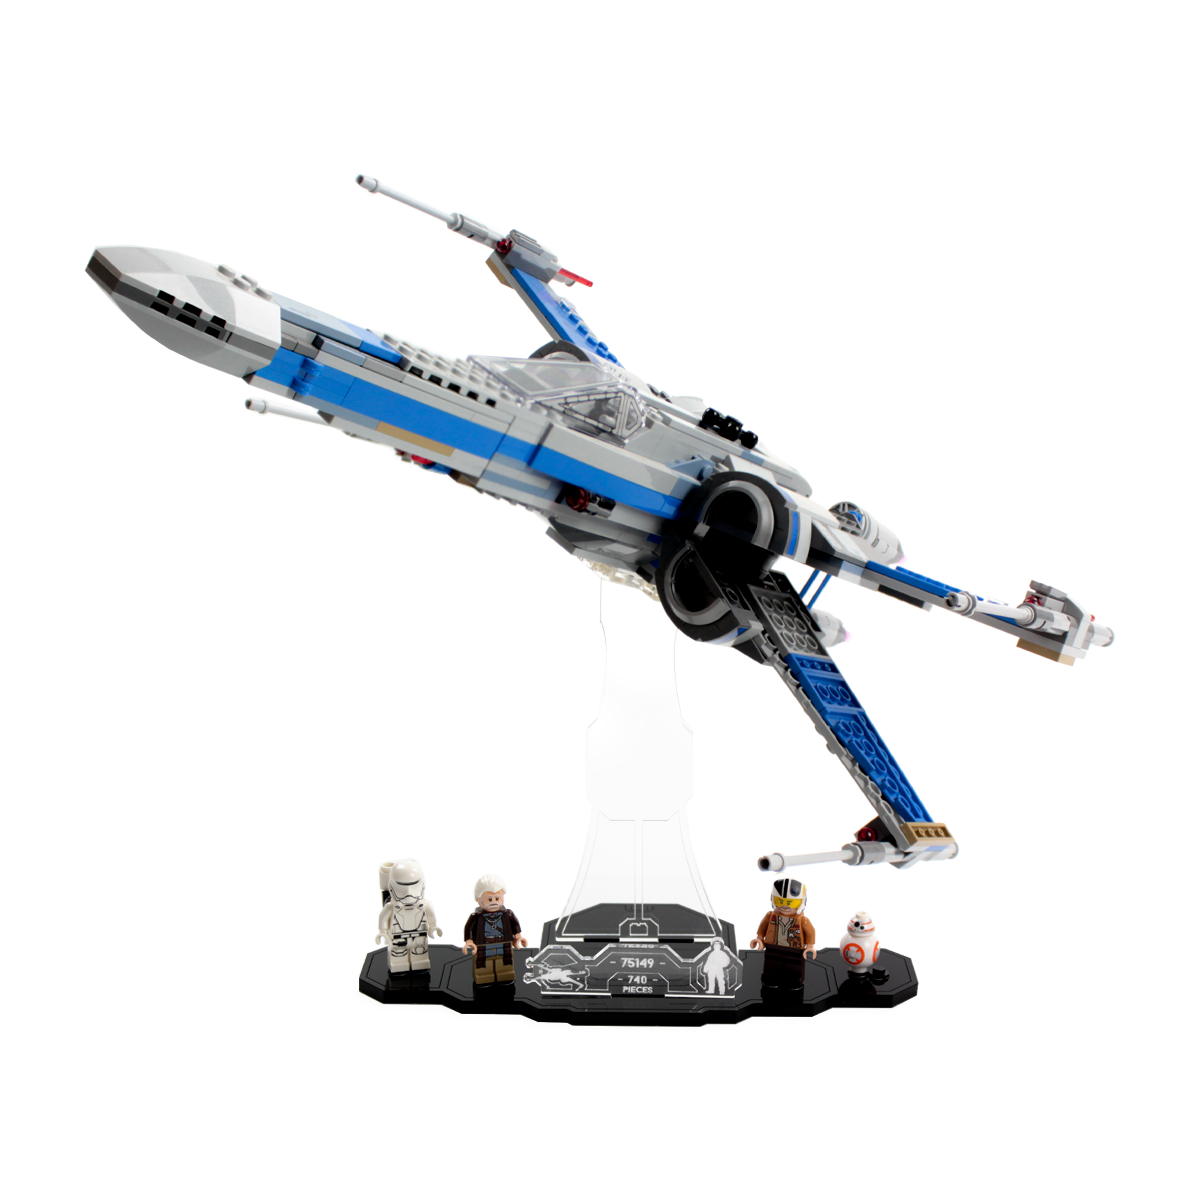 LEGO Star Wars Resistance X-Wing Fighter • Set 75149 • SetDB